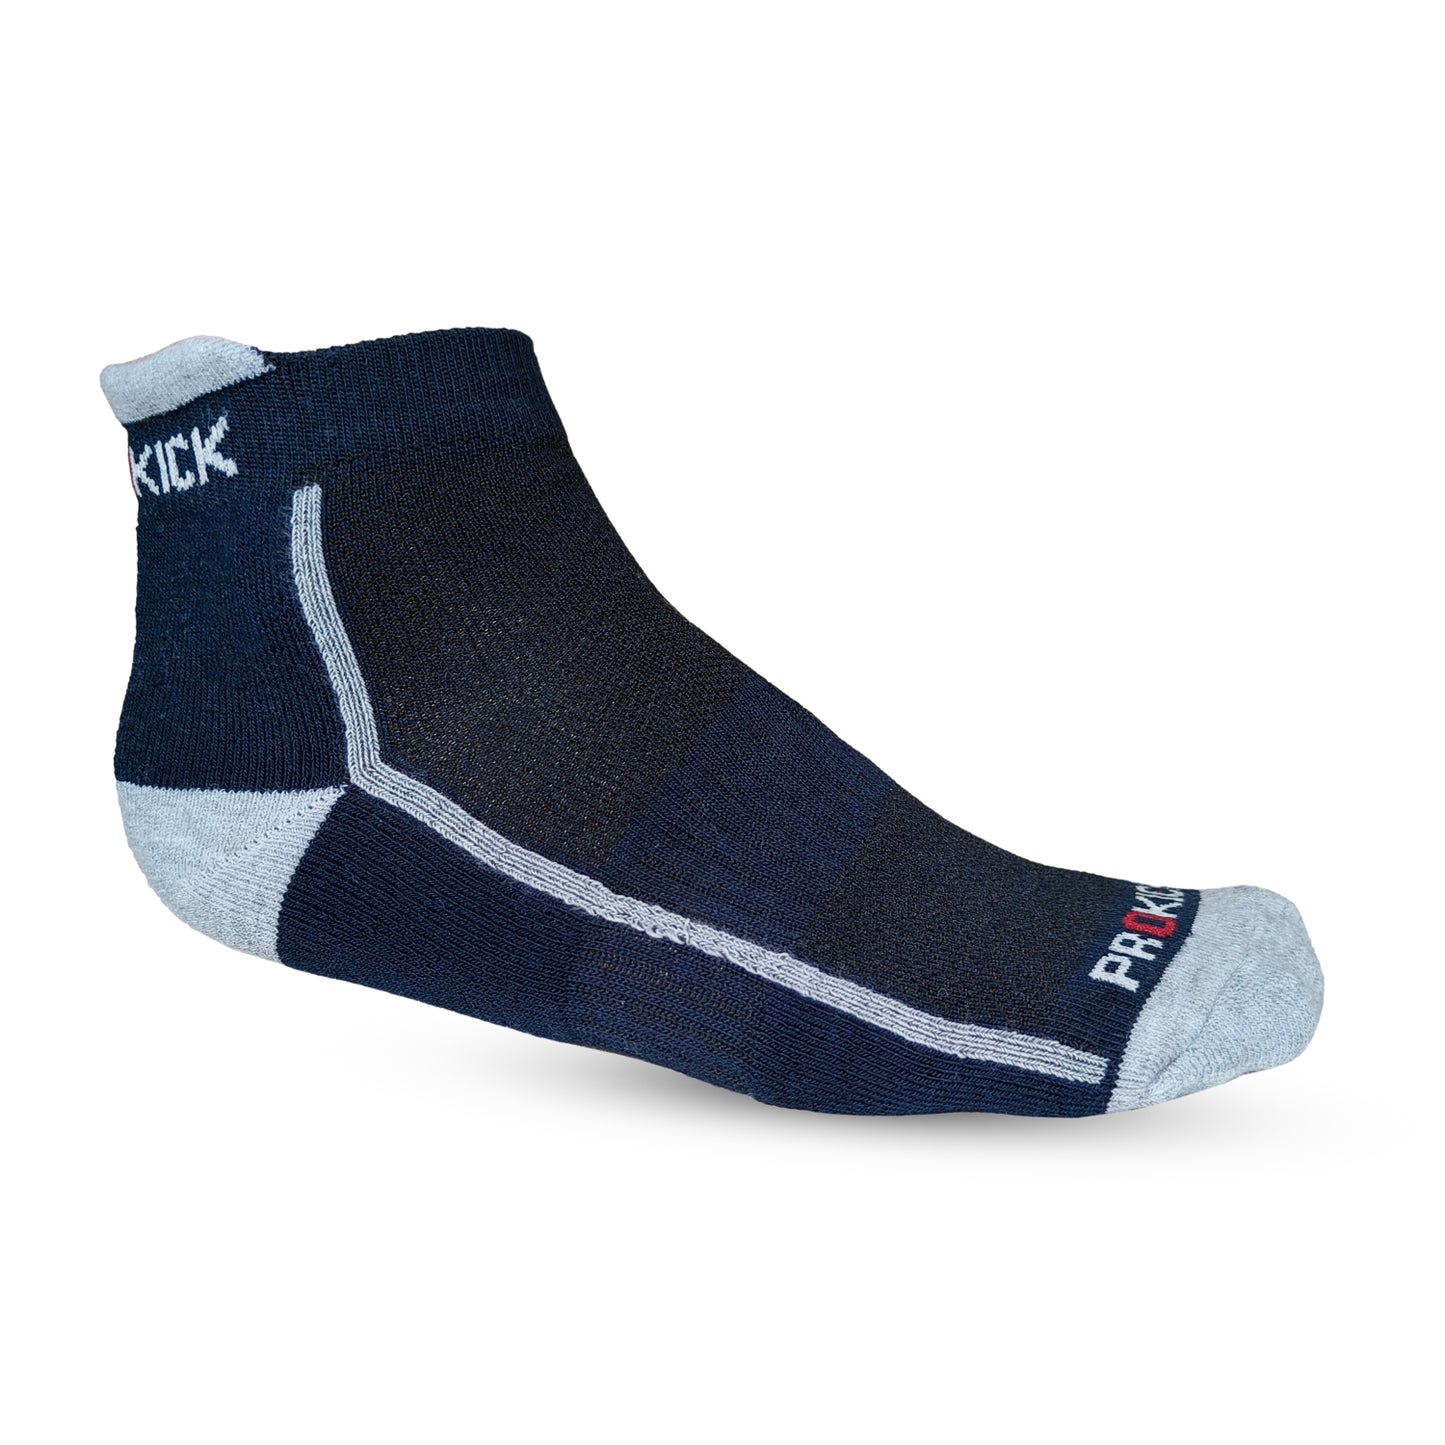 Prokick Low Ankle Socks for Men & Women, Free Size - 1 Pair - Best Price online Prokicksports.com